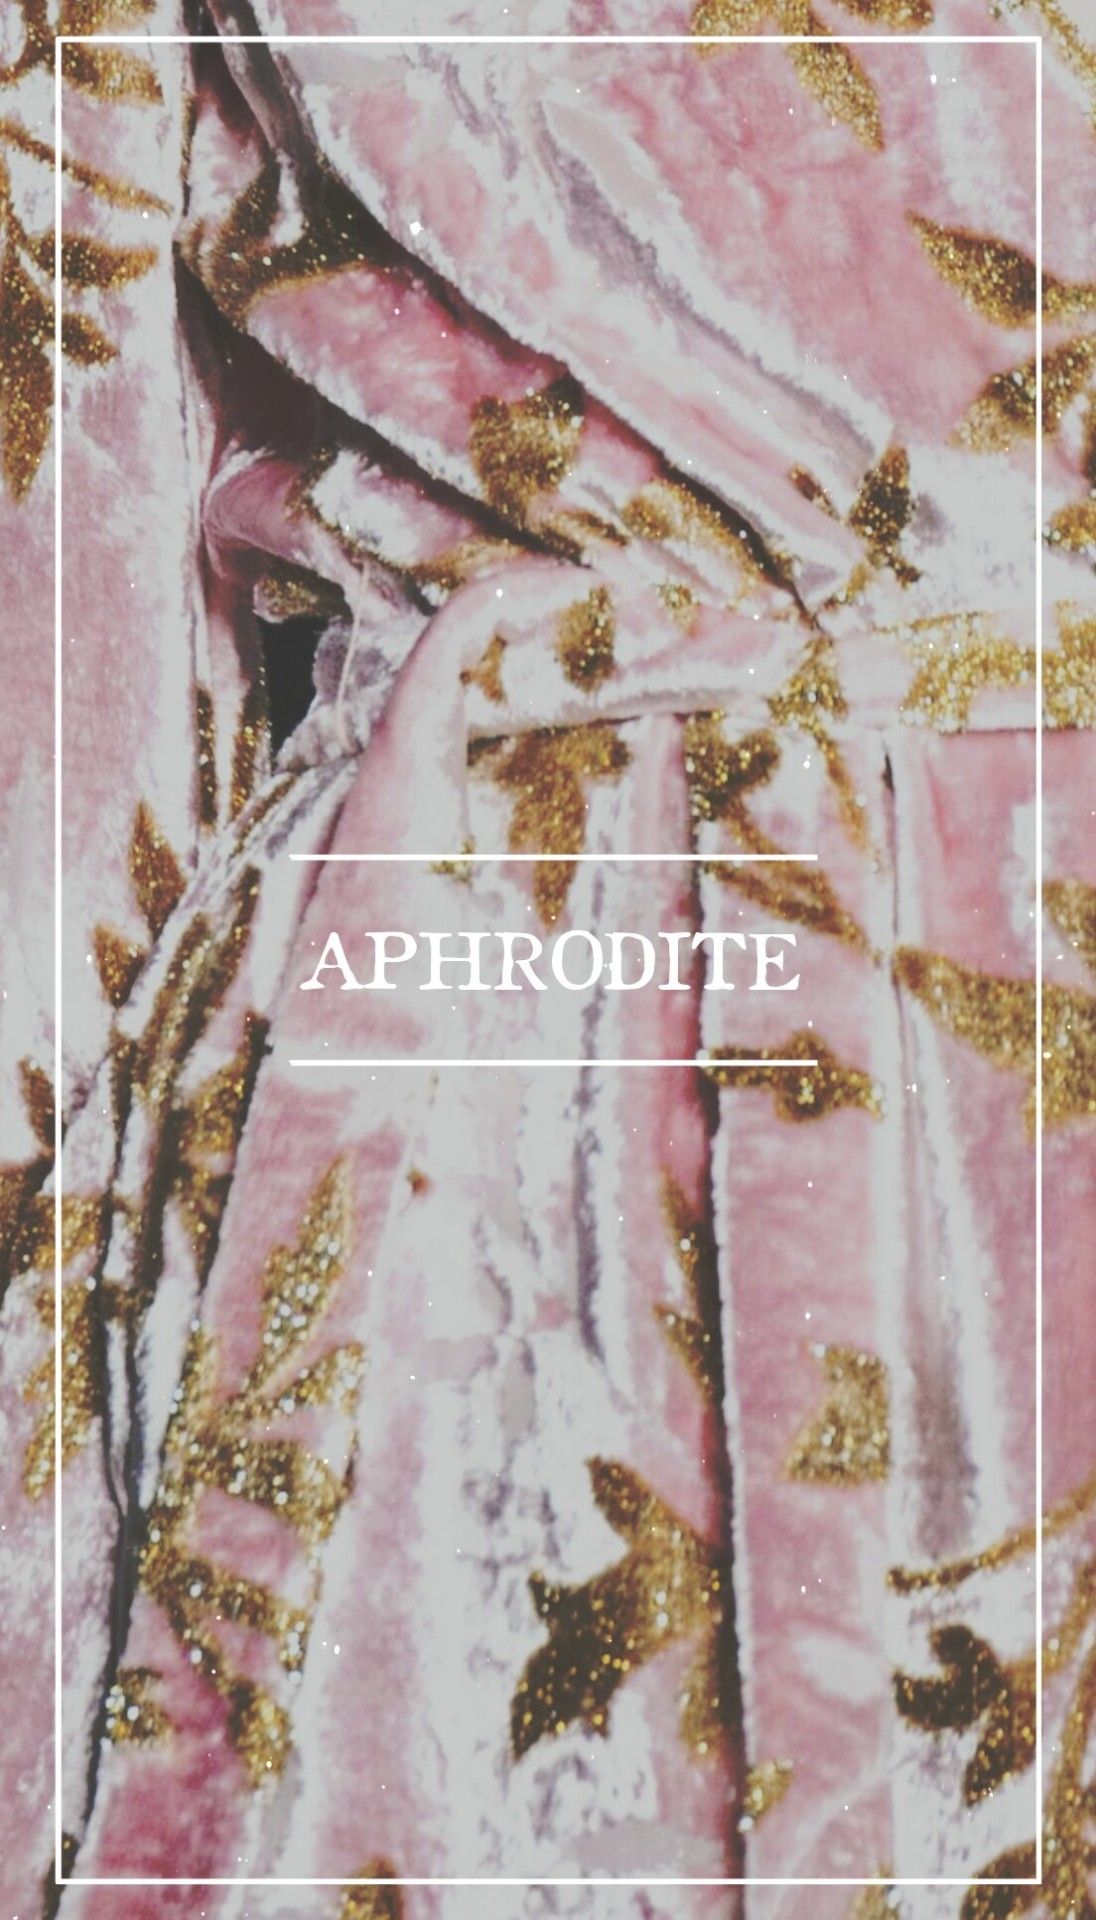 Aphrodite Aesthetics by Jordan